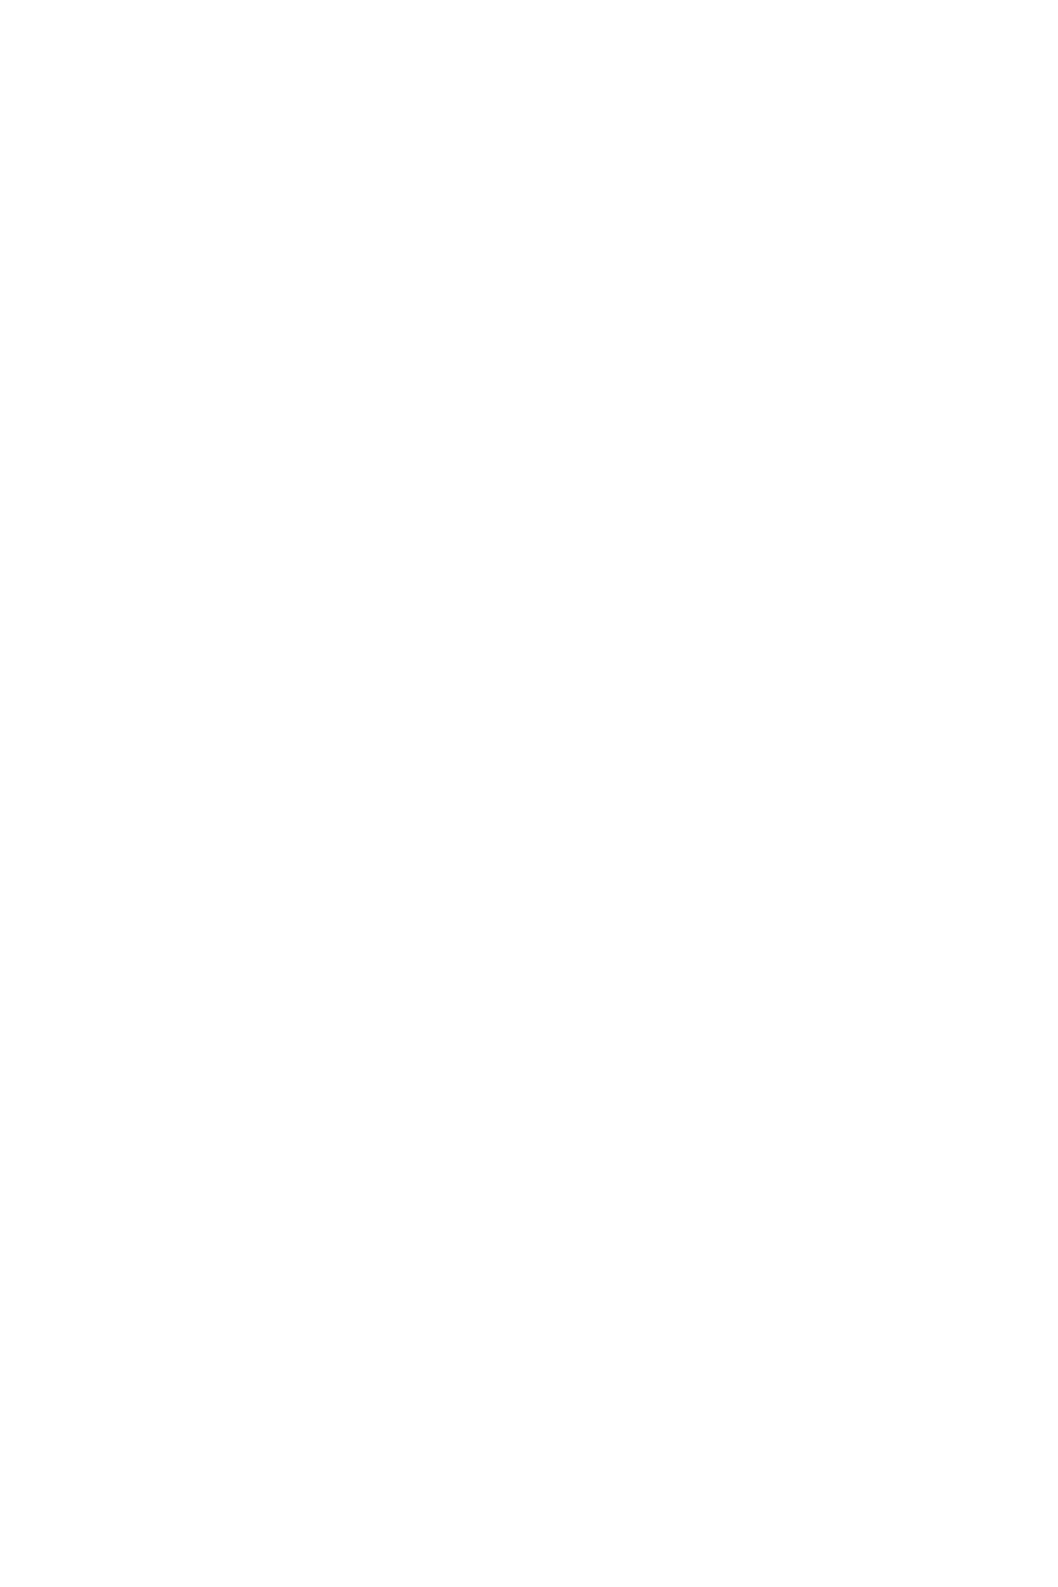 Unipol Gruppo logo for dark backgrounds (transparent PNG)